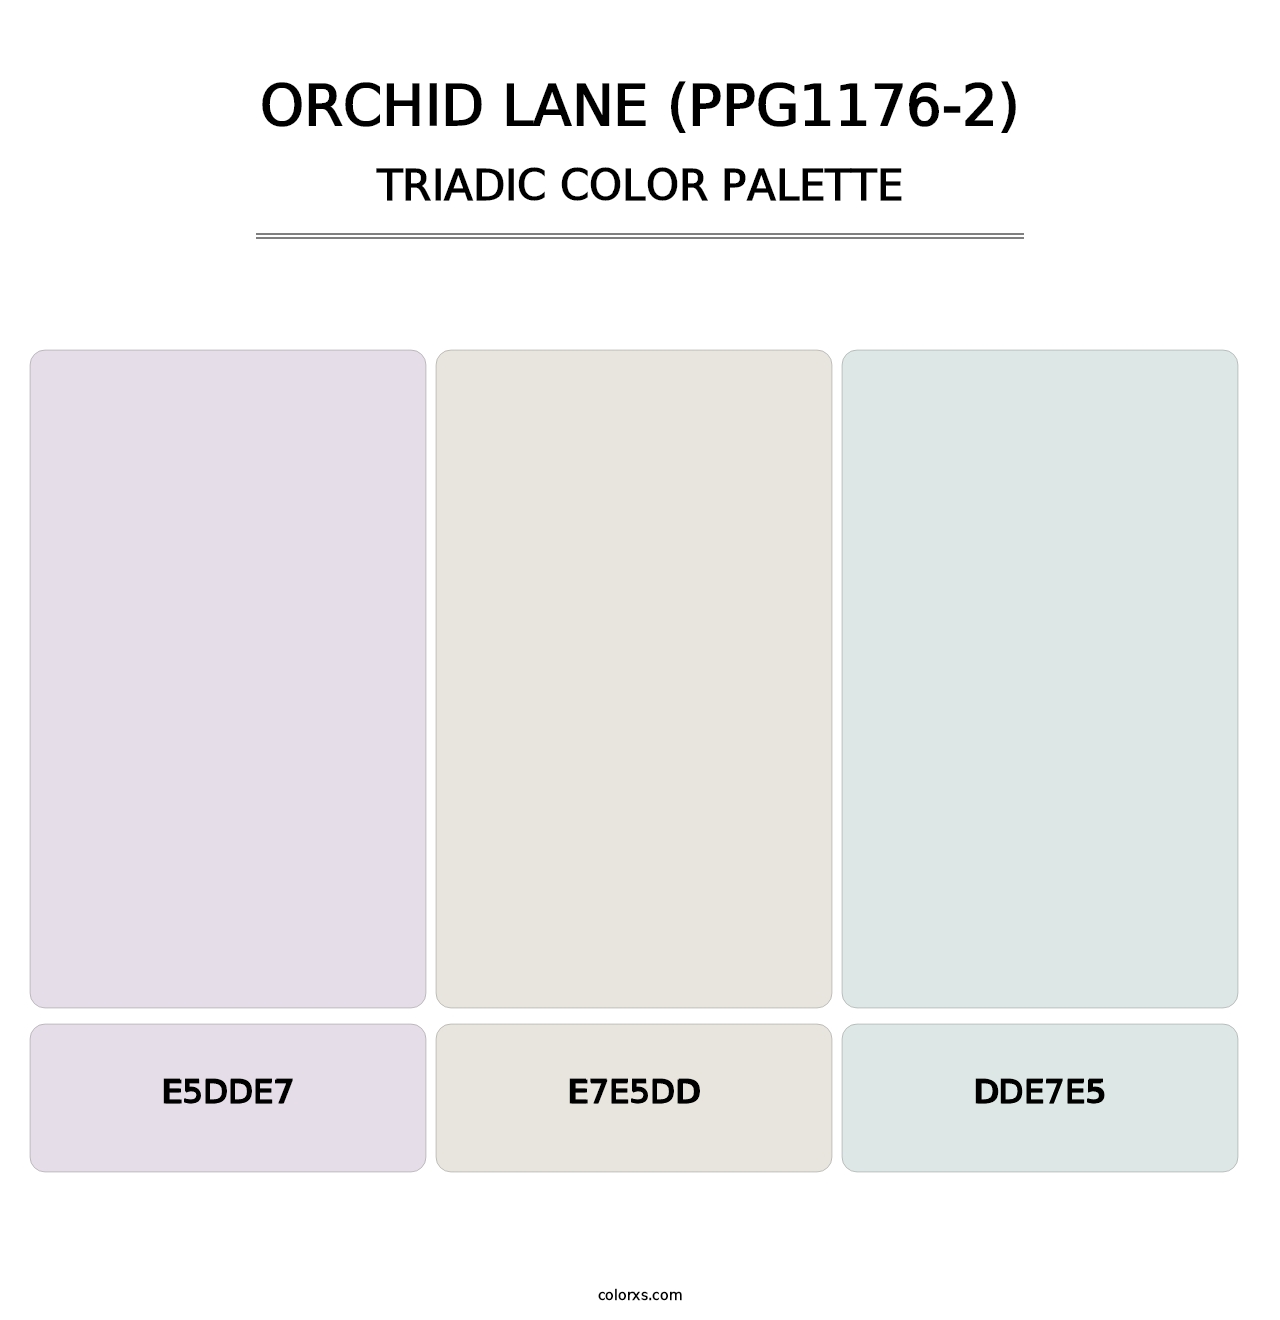 Orchid Lane (PPG1176-2) - Triadic Color Palette